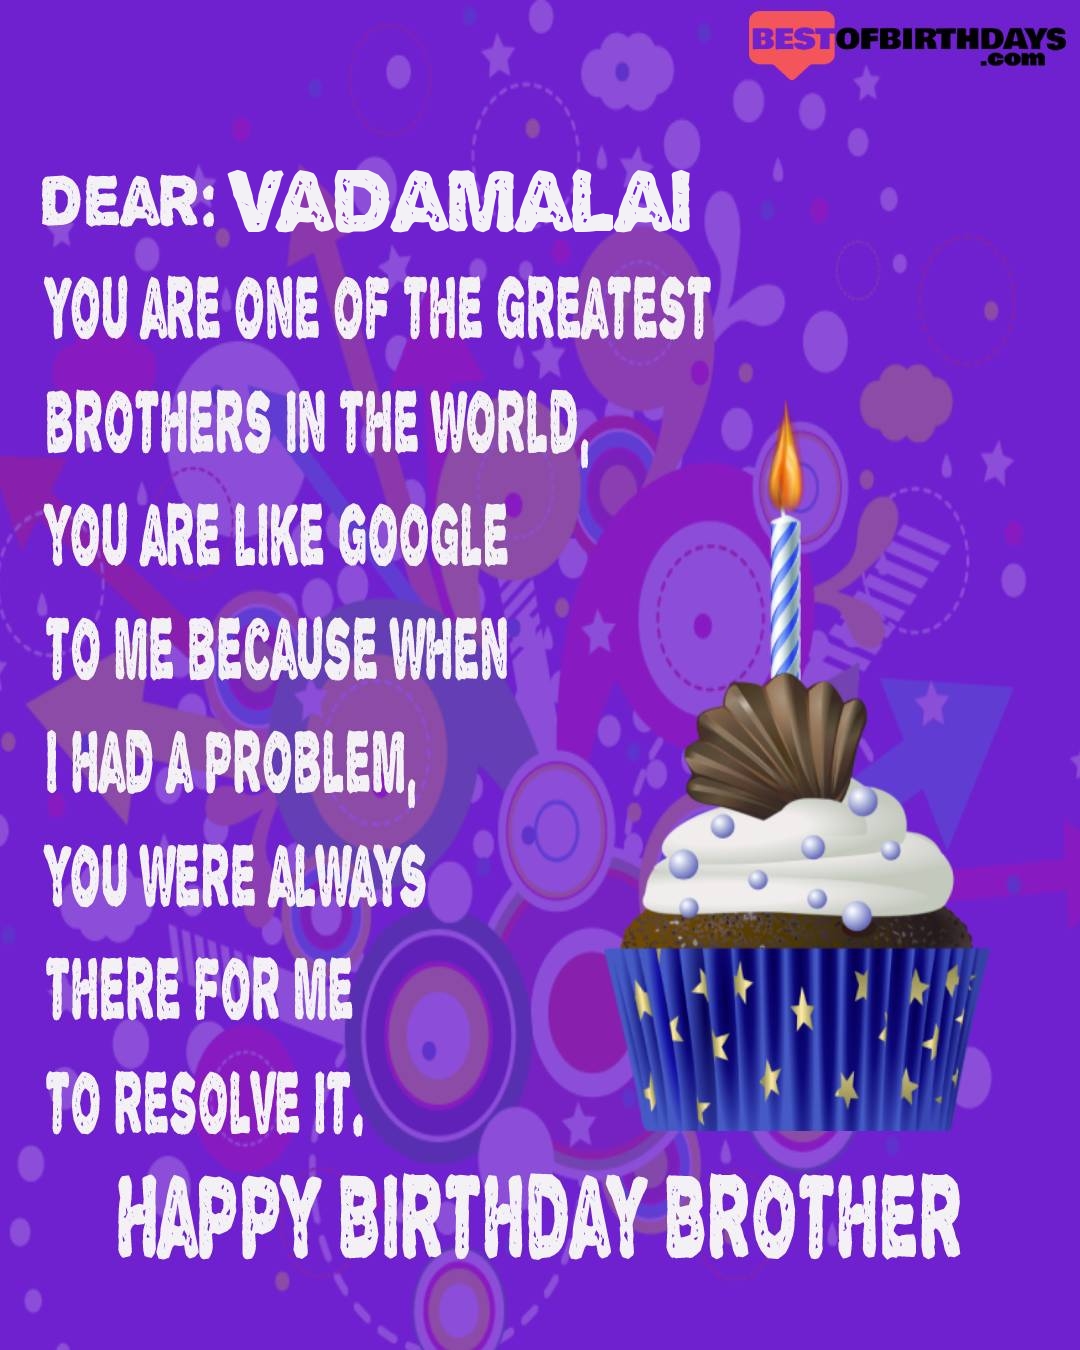 Happy birthday vadamalai bhai brother bro